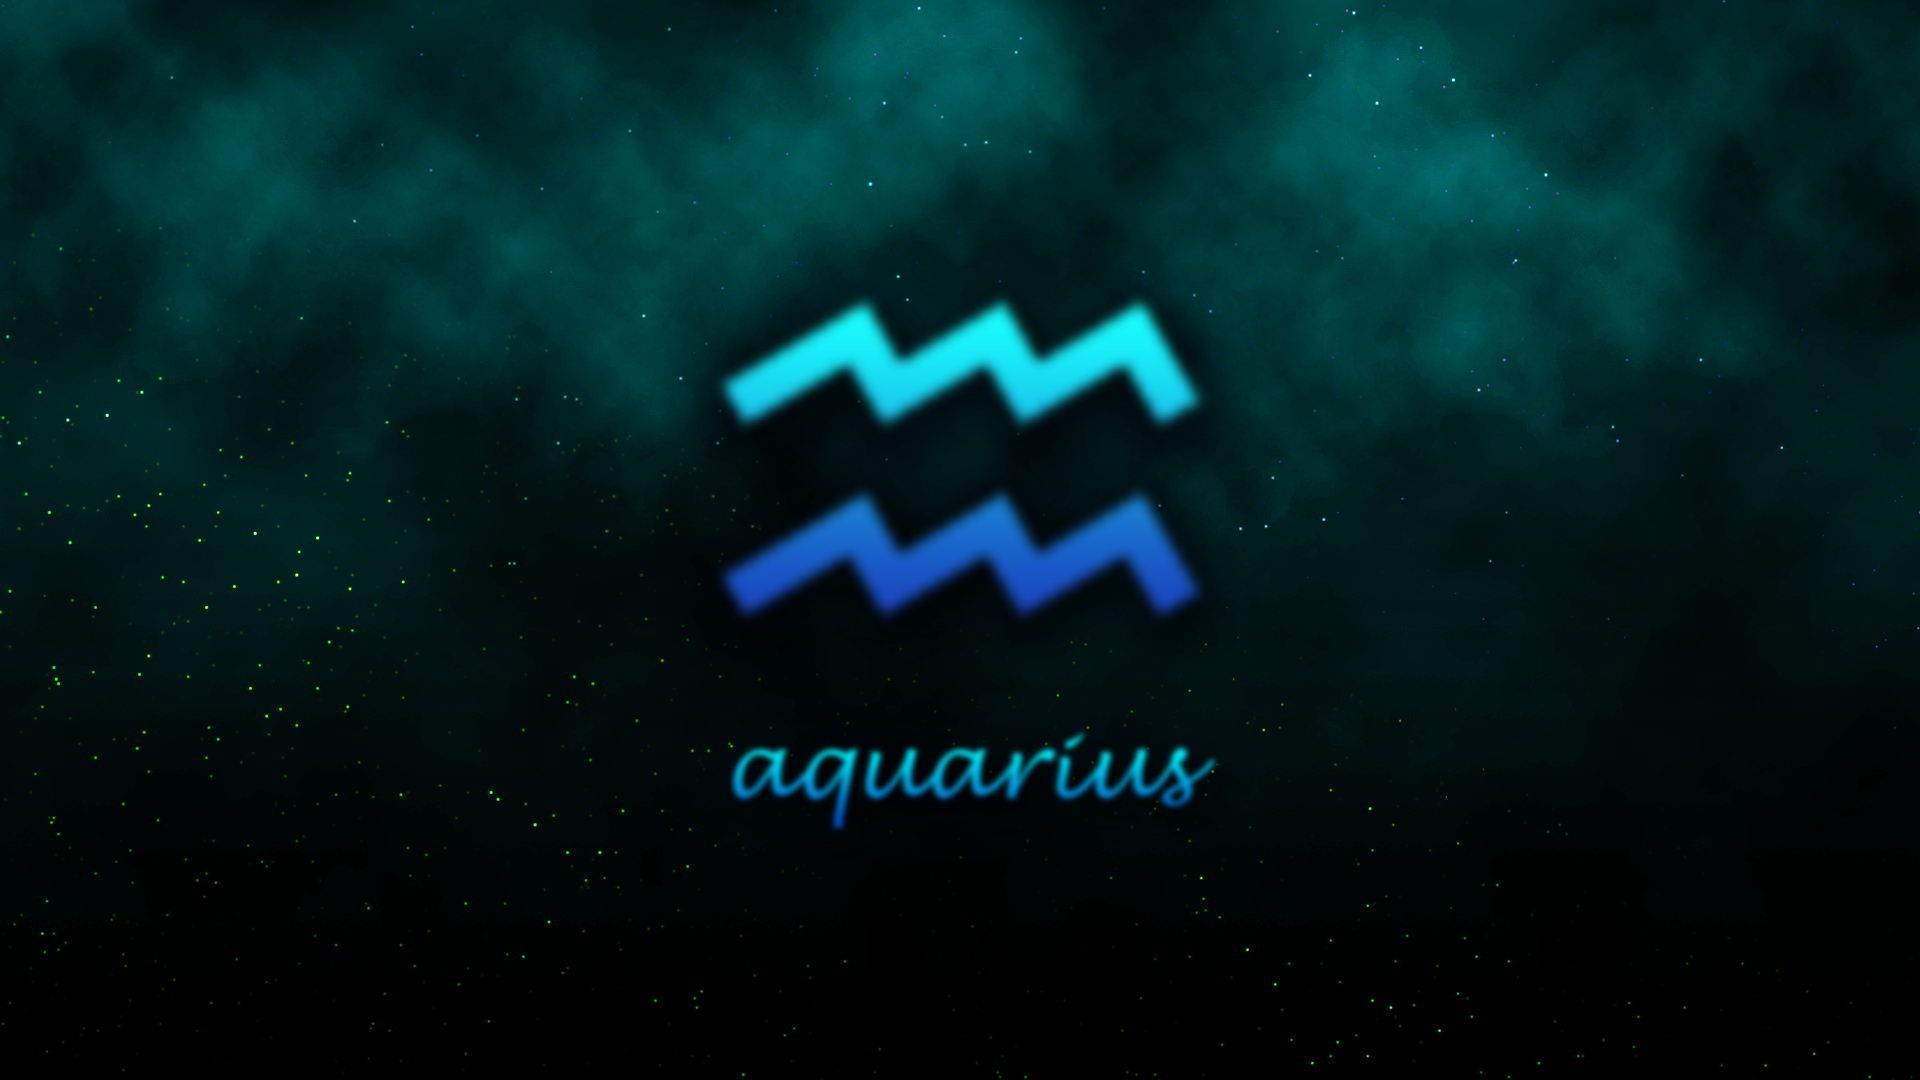 11 Latest Free wallpaper zodiac sign aquarius with gossip  